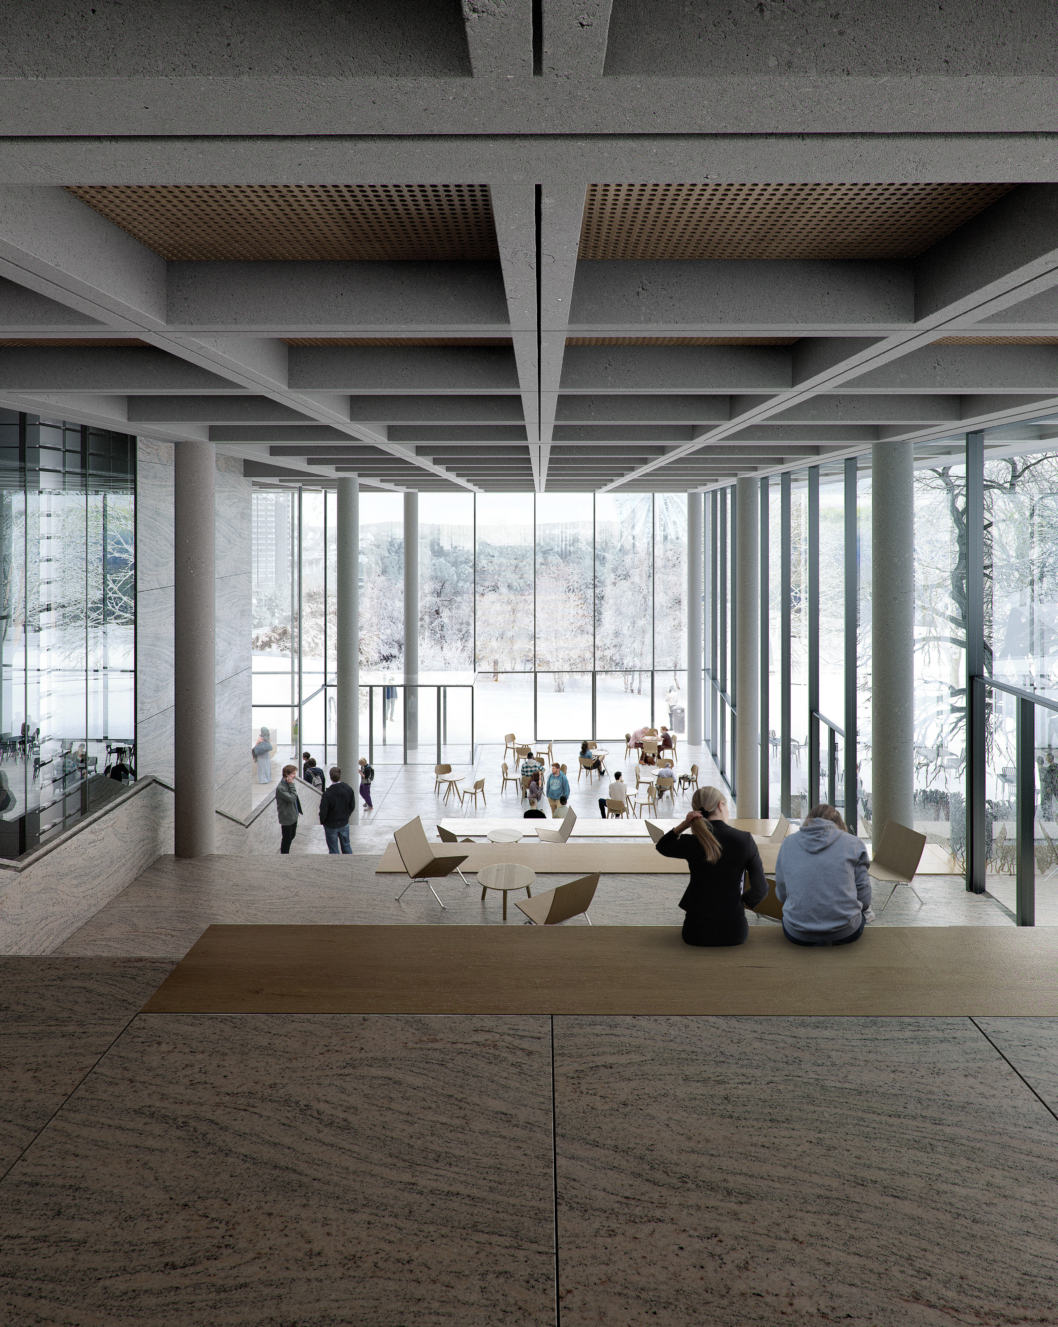 160 cobe goteborg university library interior ground floor